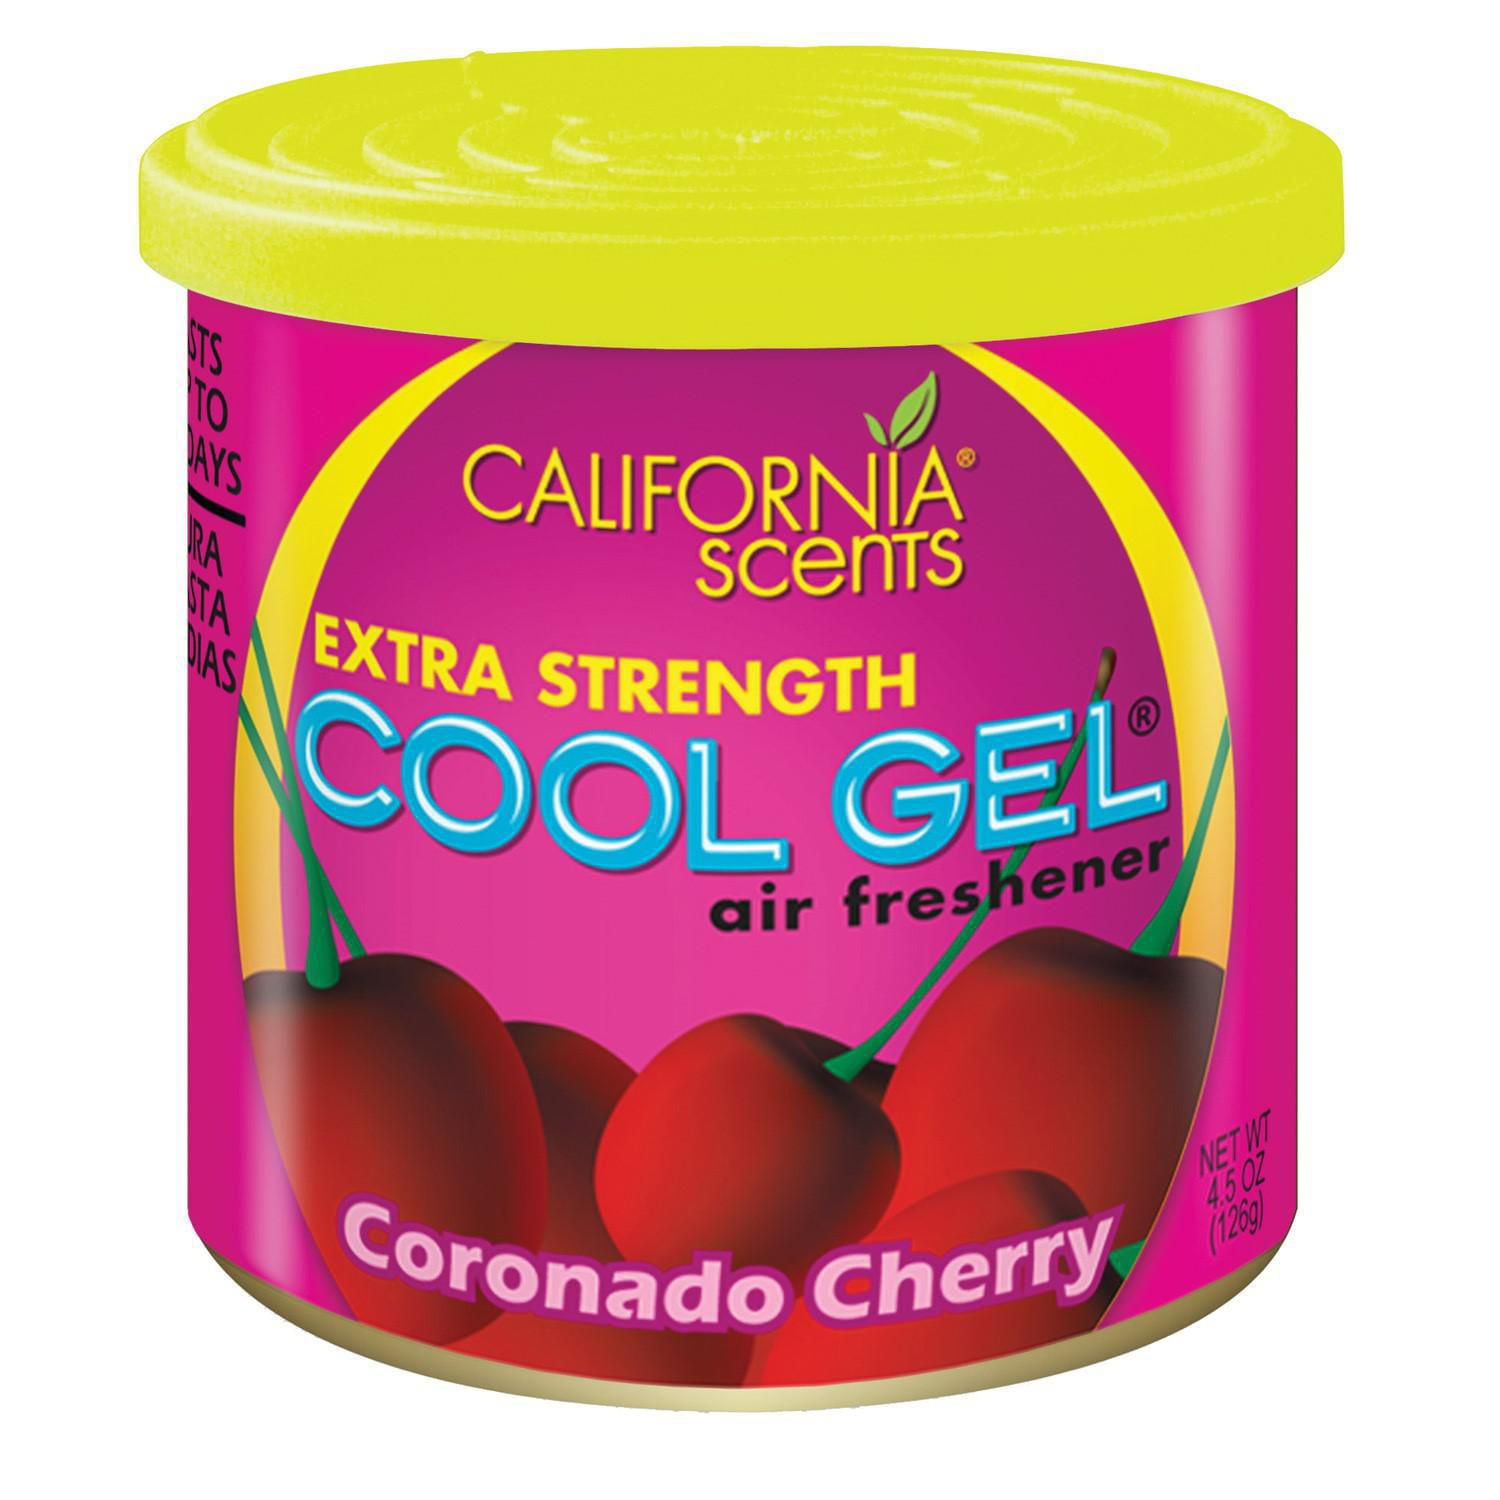  California Scents Car Scents Coronado Cherry Scent Air Freshener  1.5 oz. Solid : Sports & Outdoors